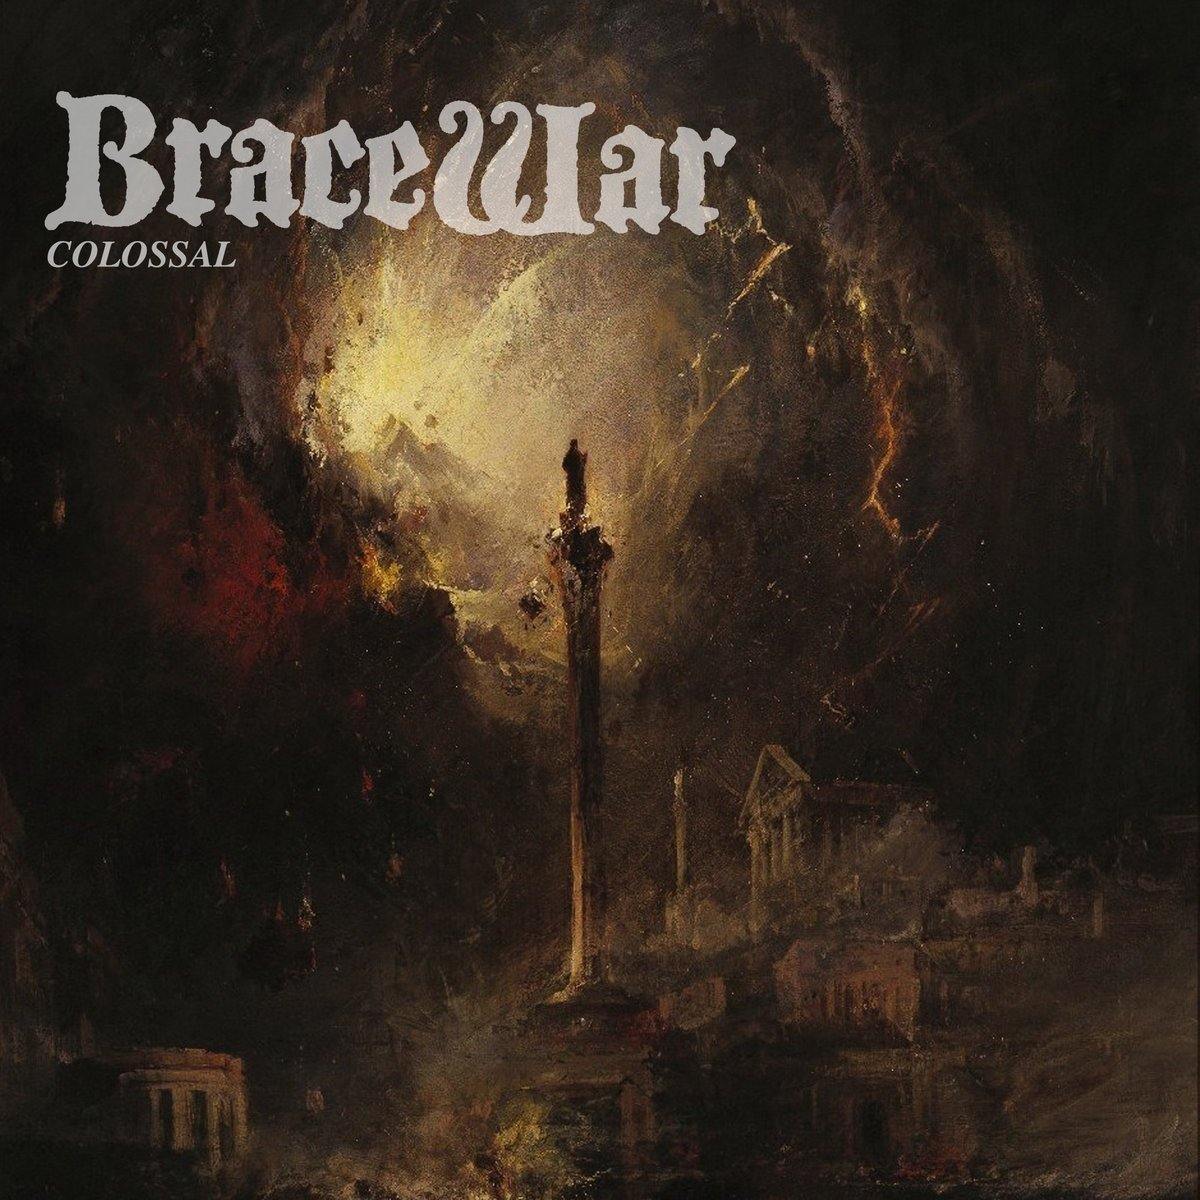 Buy – Bracewar "Colossal" 7" – Band & Music Merch – Cold Cuts Merch